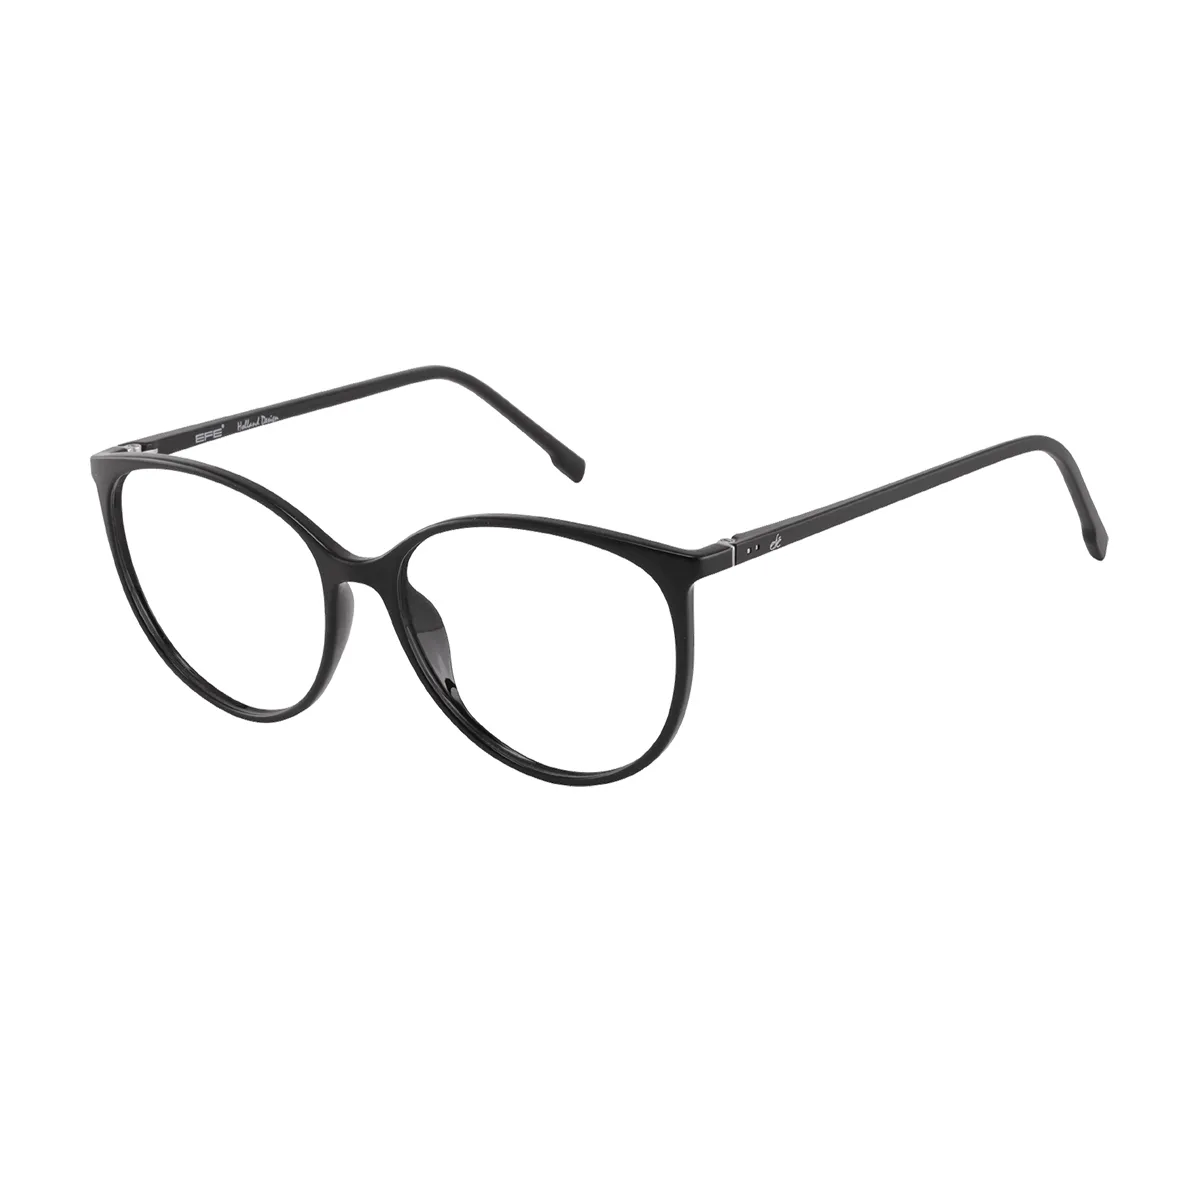 Blount - Round Black Glasses for Women - EFE